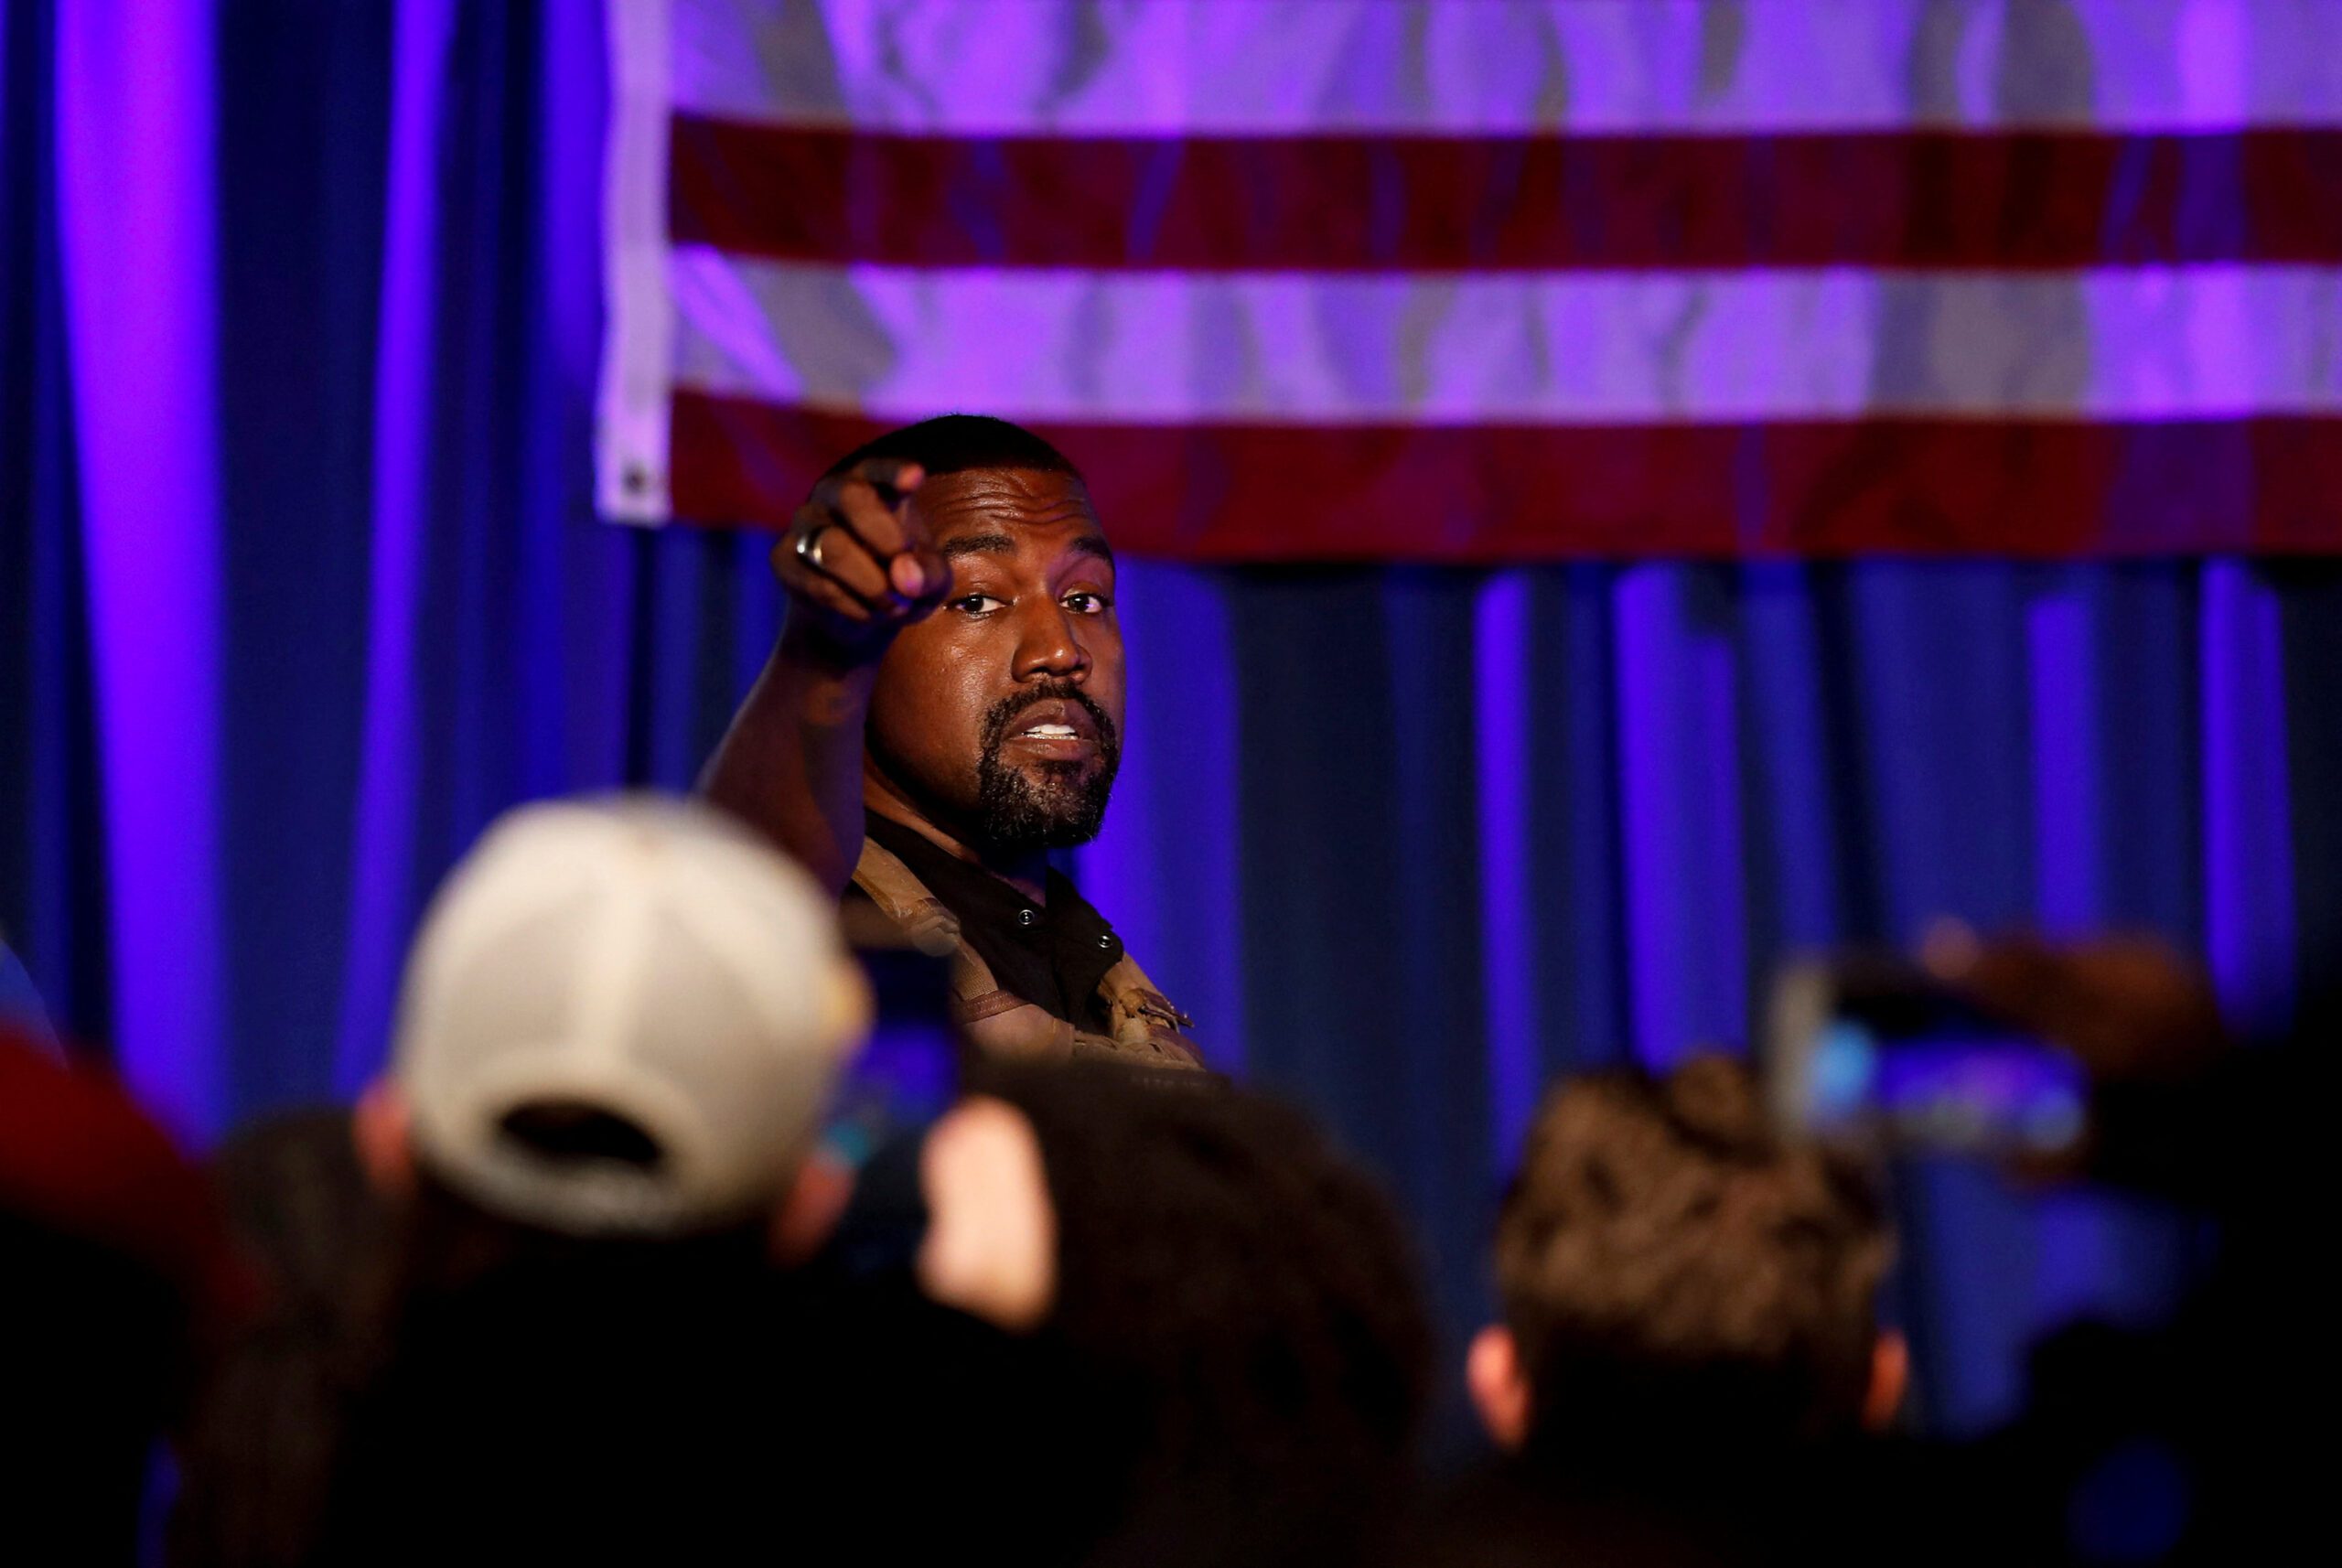 Adidas plans to end Kanye West partnership over ‘offensive behavior’